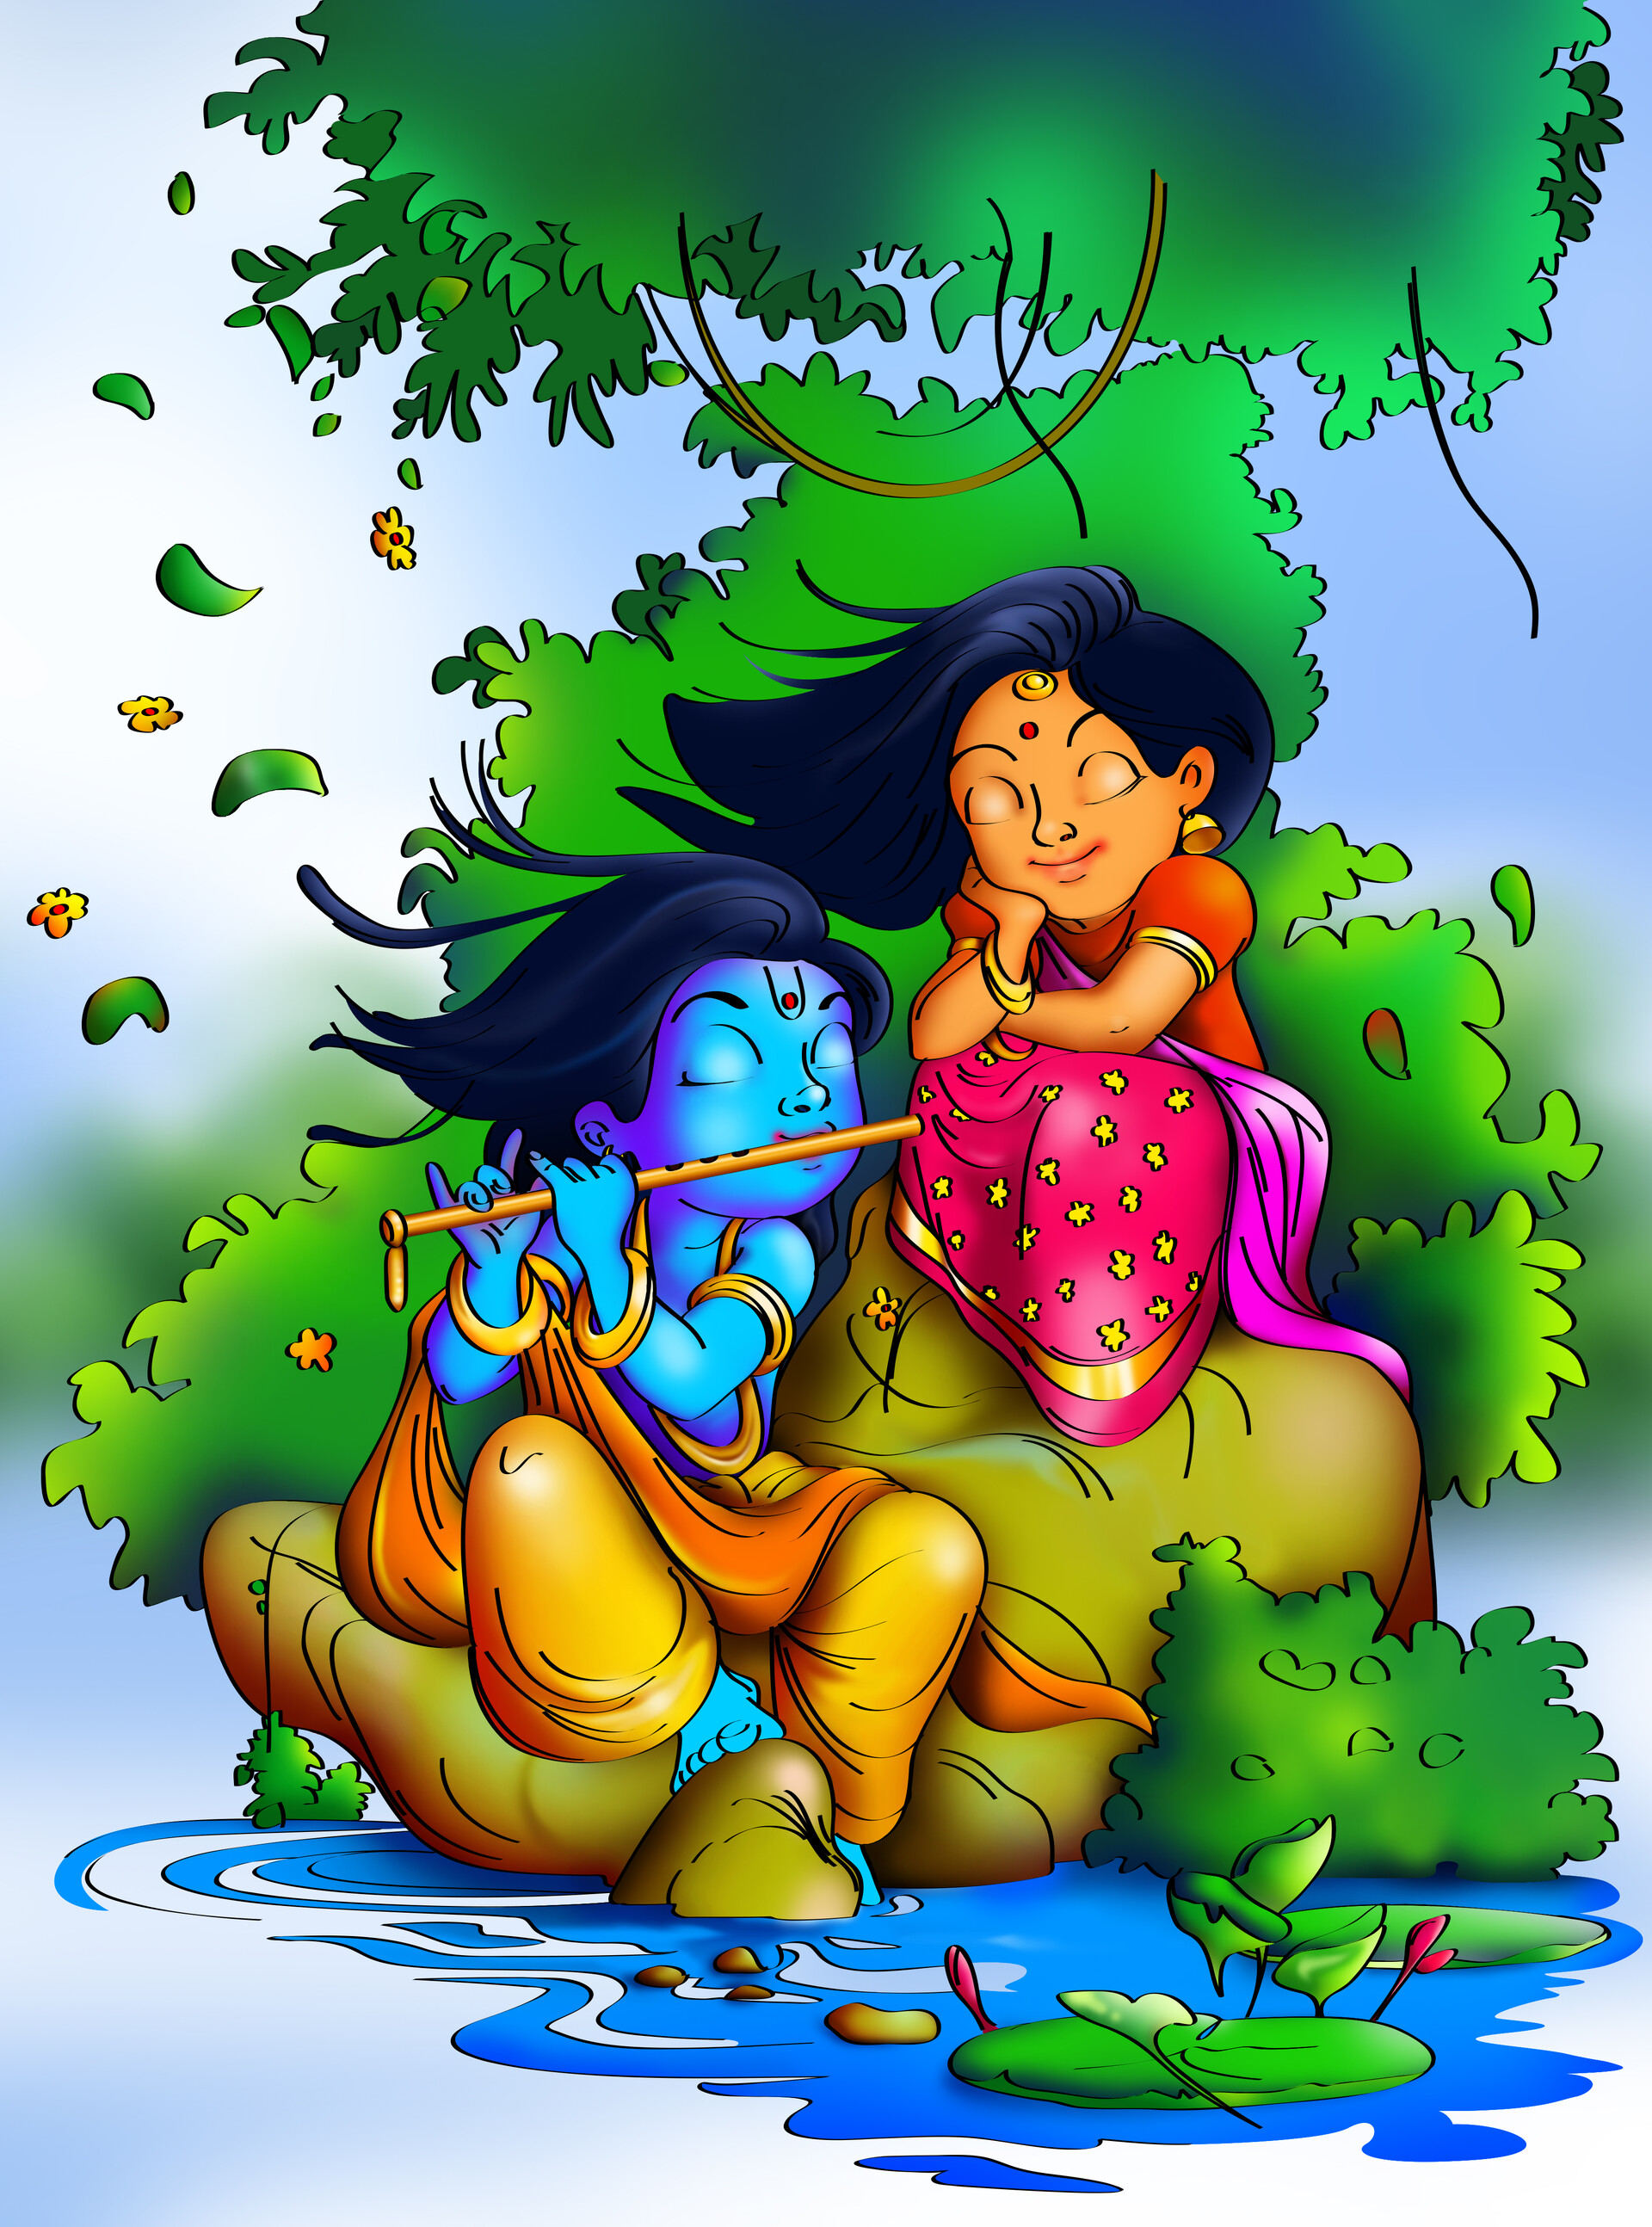 ArtStation - Krishna and Radha Illustration